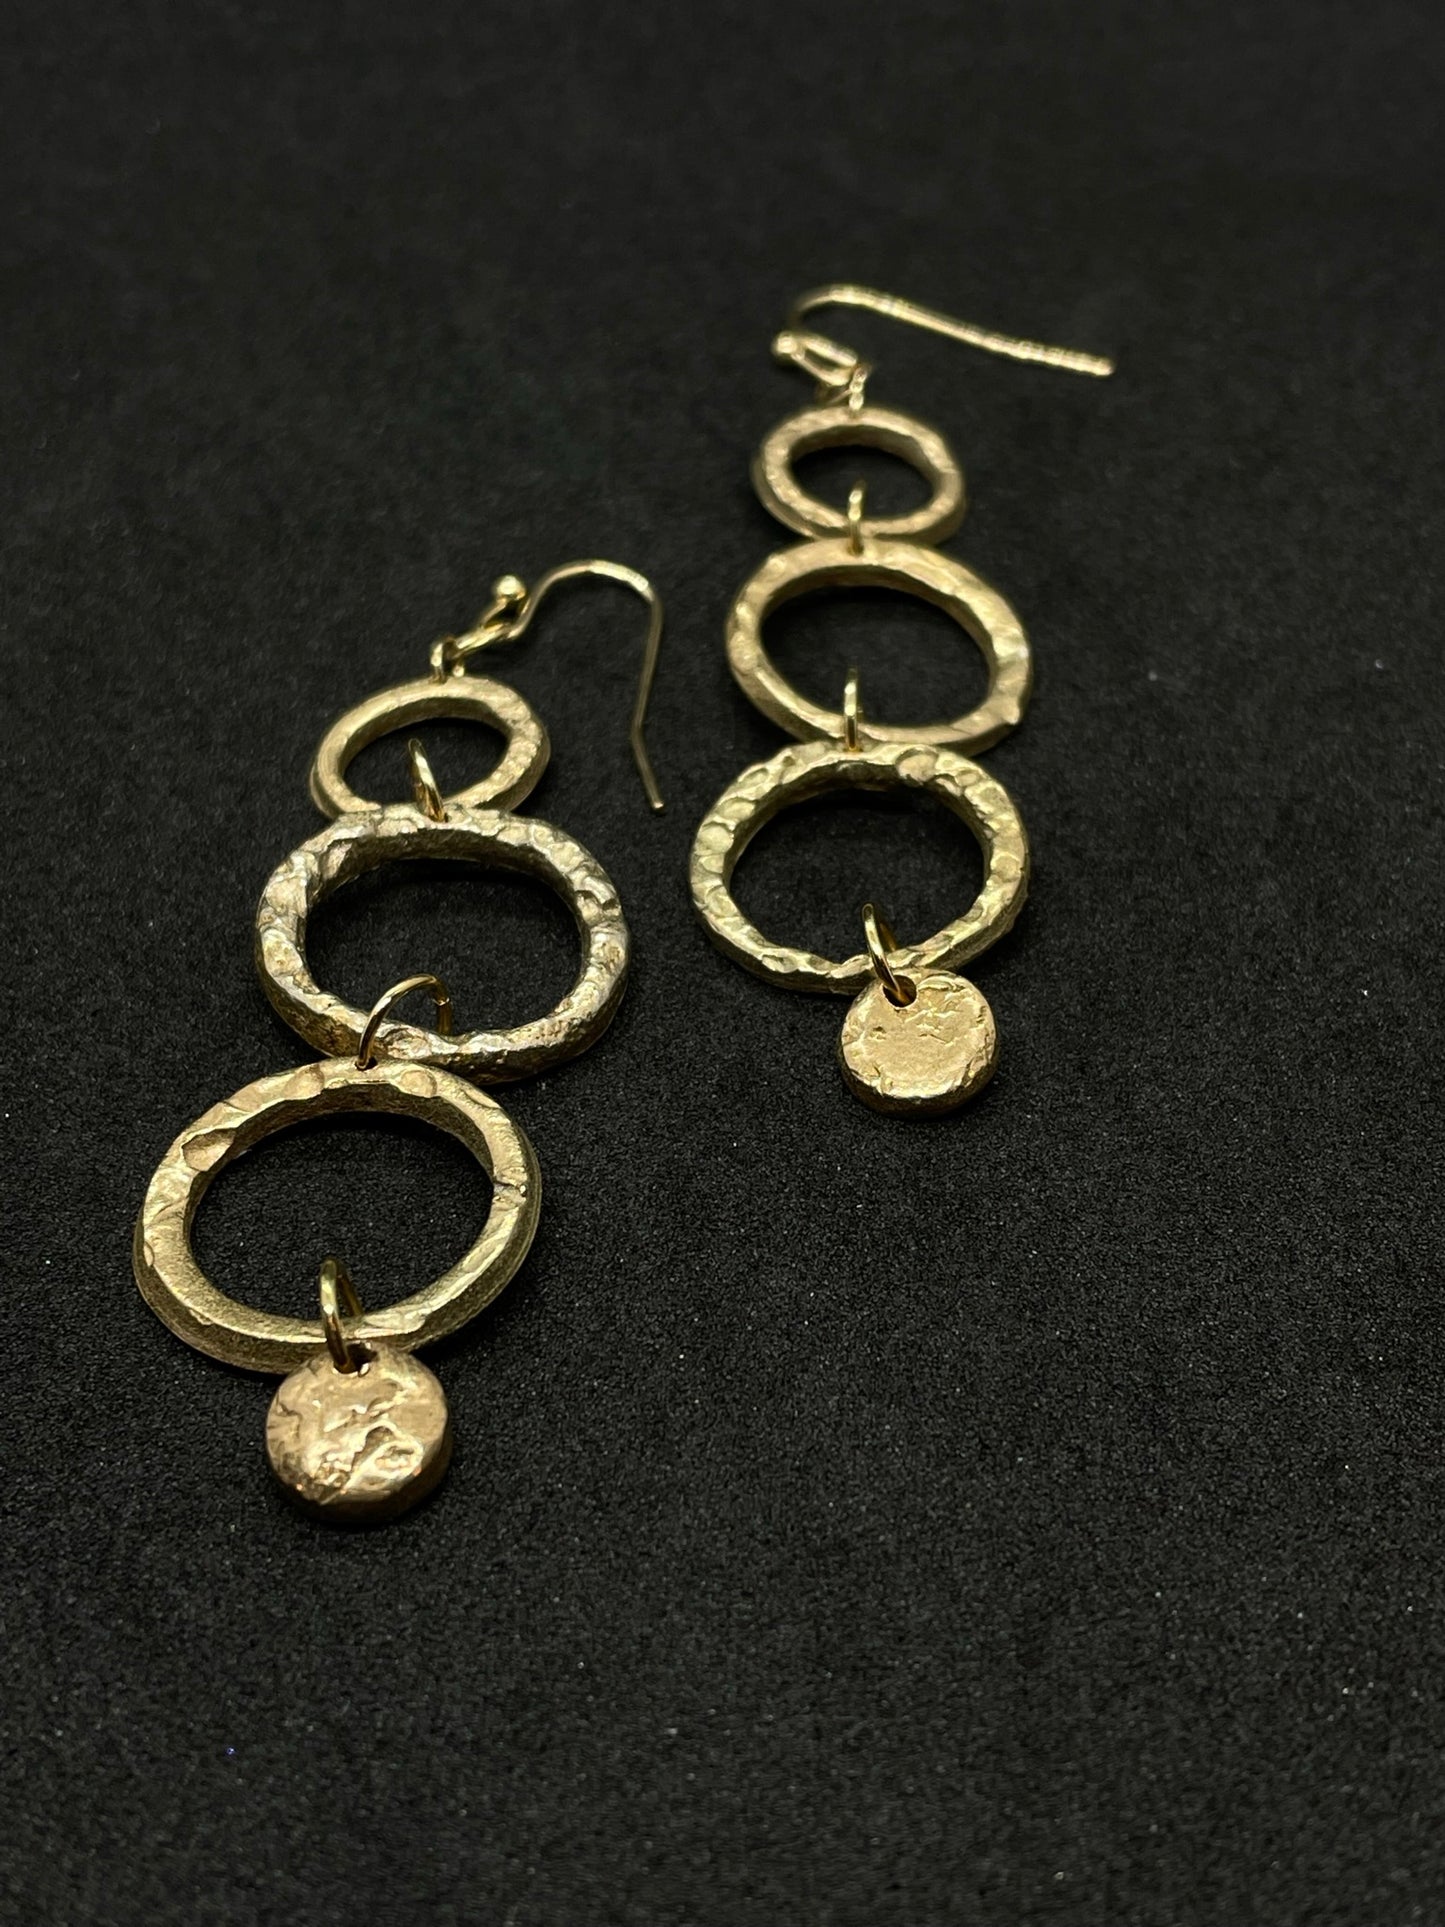 Bronze 3 rings  with disc drop earrings